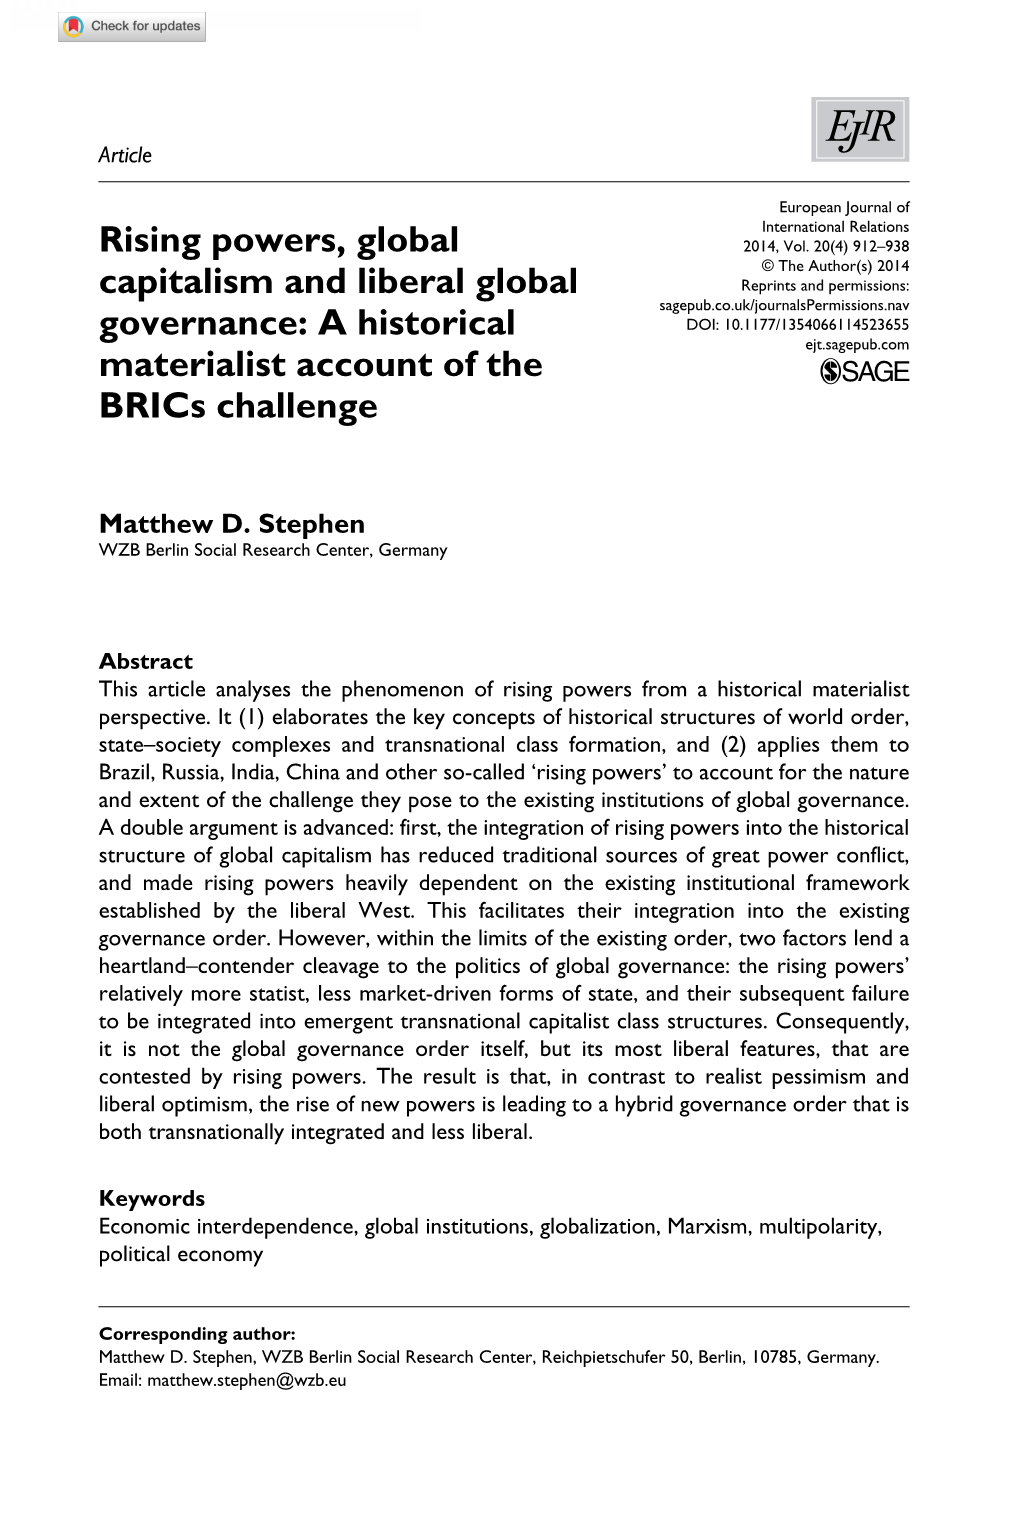 Rising Powers, Global Capitalism and Liberal Global Governance